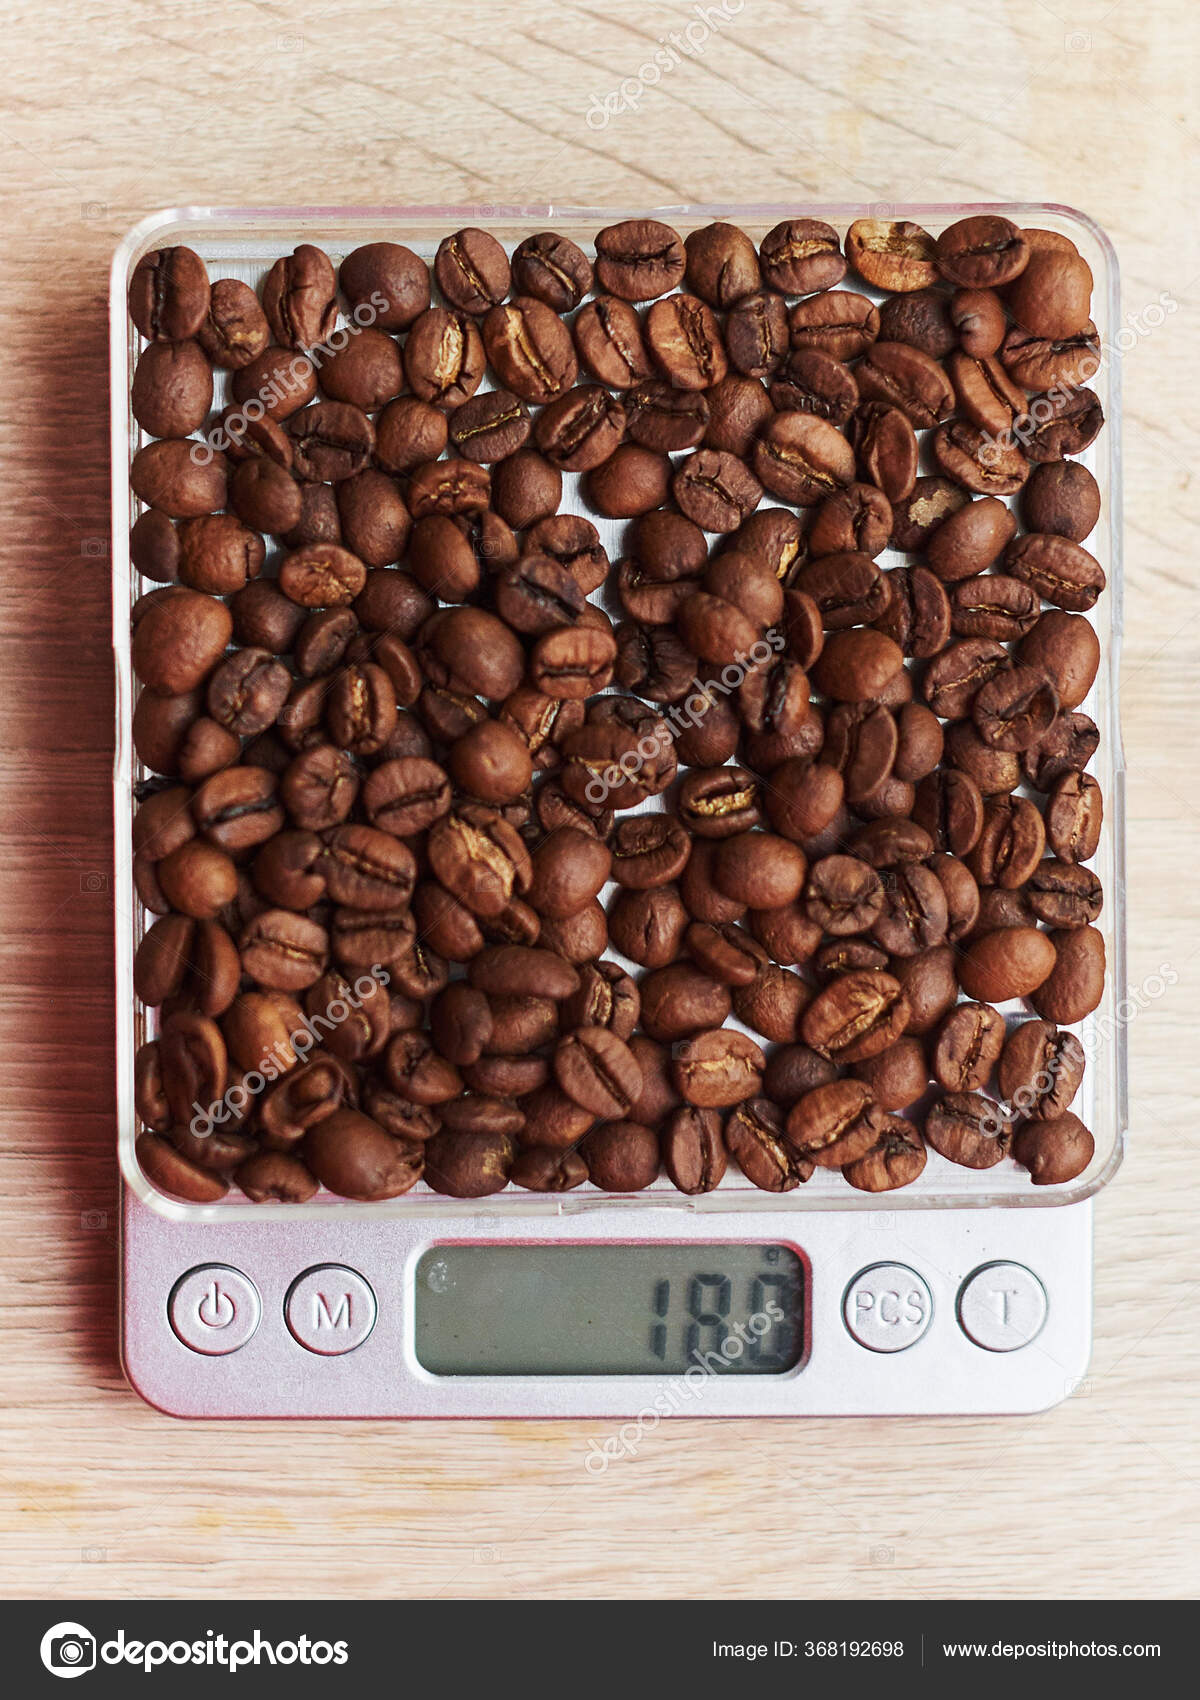 https://st3.depositphotos.com/6817322/36819/i/1600/depositphotos_368192698-stock-photo-eighteen-grams-roasted-coffee-beans.jpg